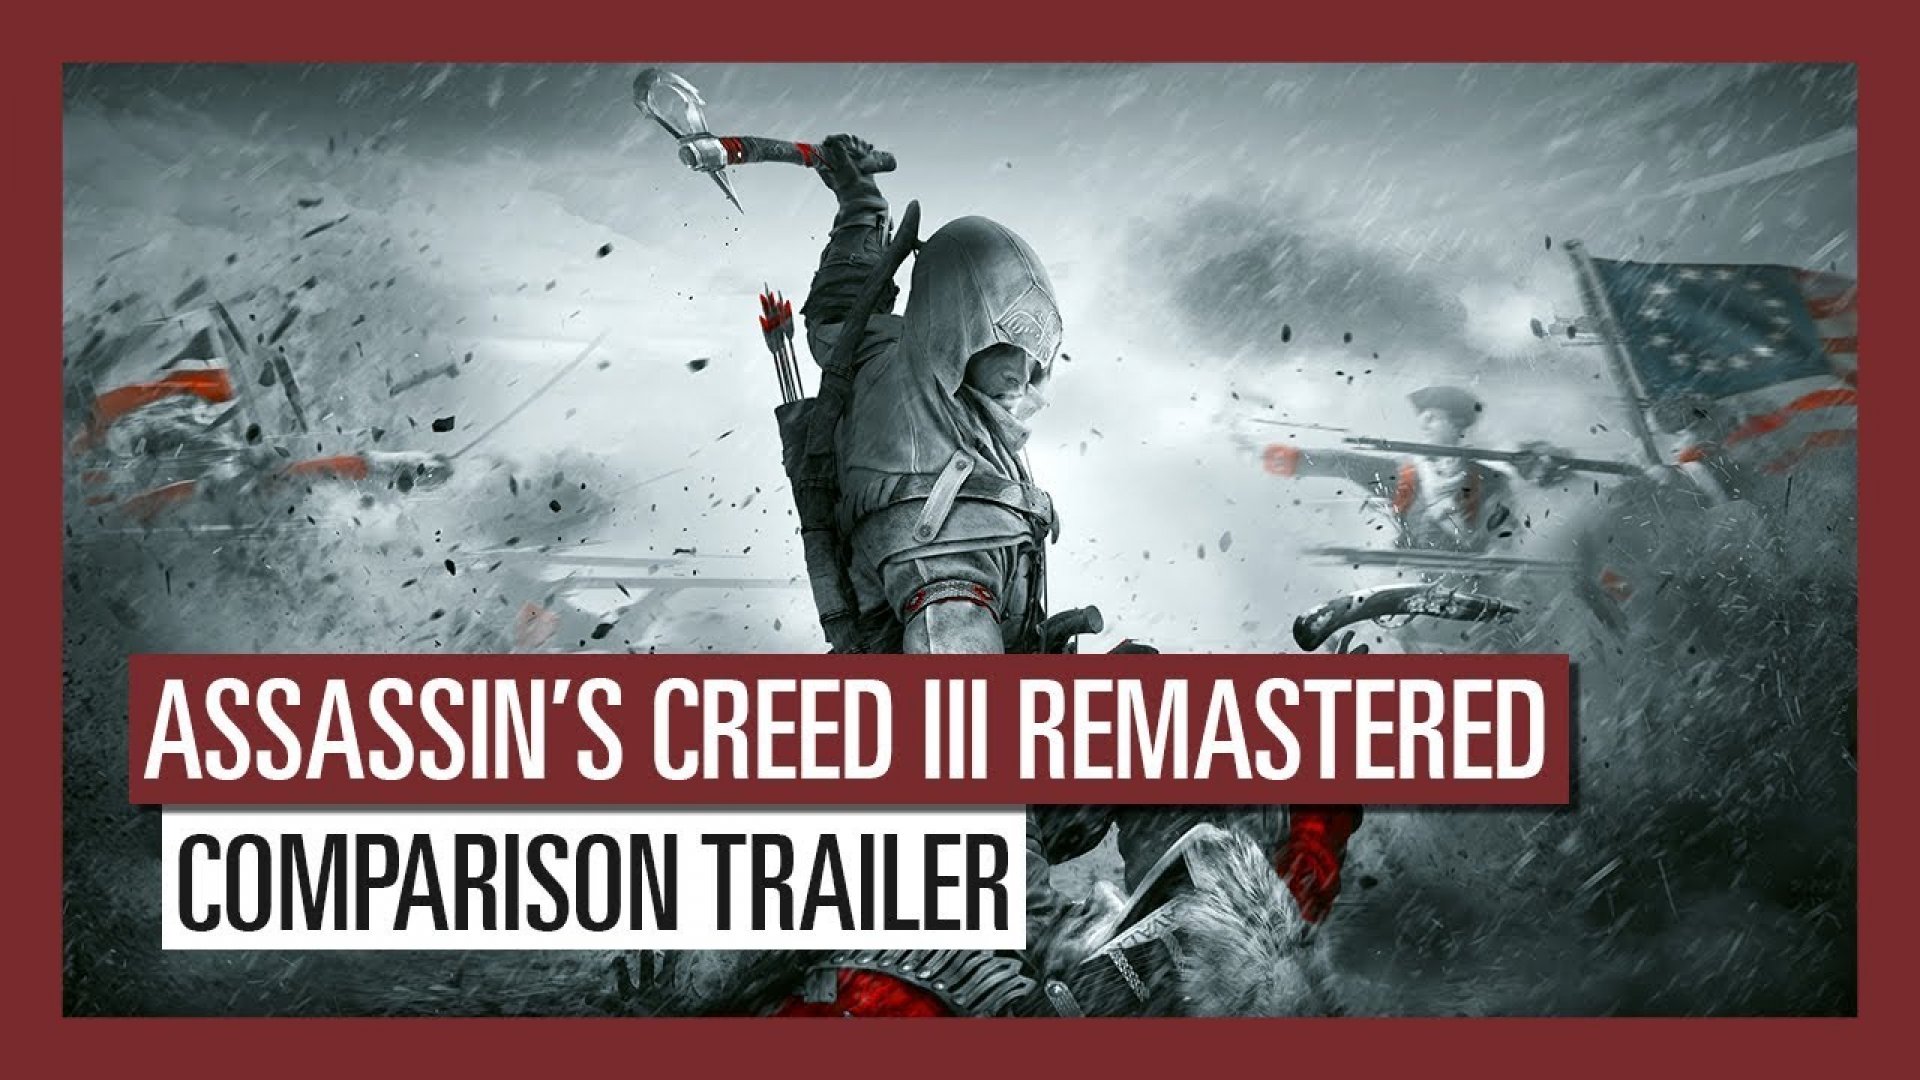 Обновление ассасин крид. Assassin's Creed 3 Remastered. 2019 - Assassin's Creed 3 Remastered - обложка. Assassins Creed 3 отличия ремастера. Компарисон.